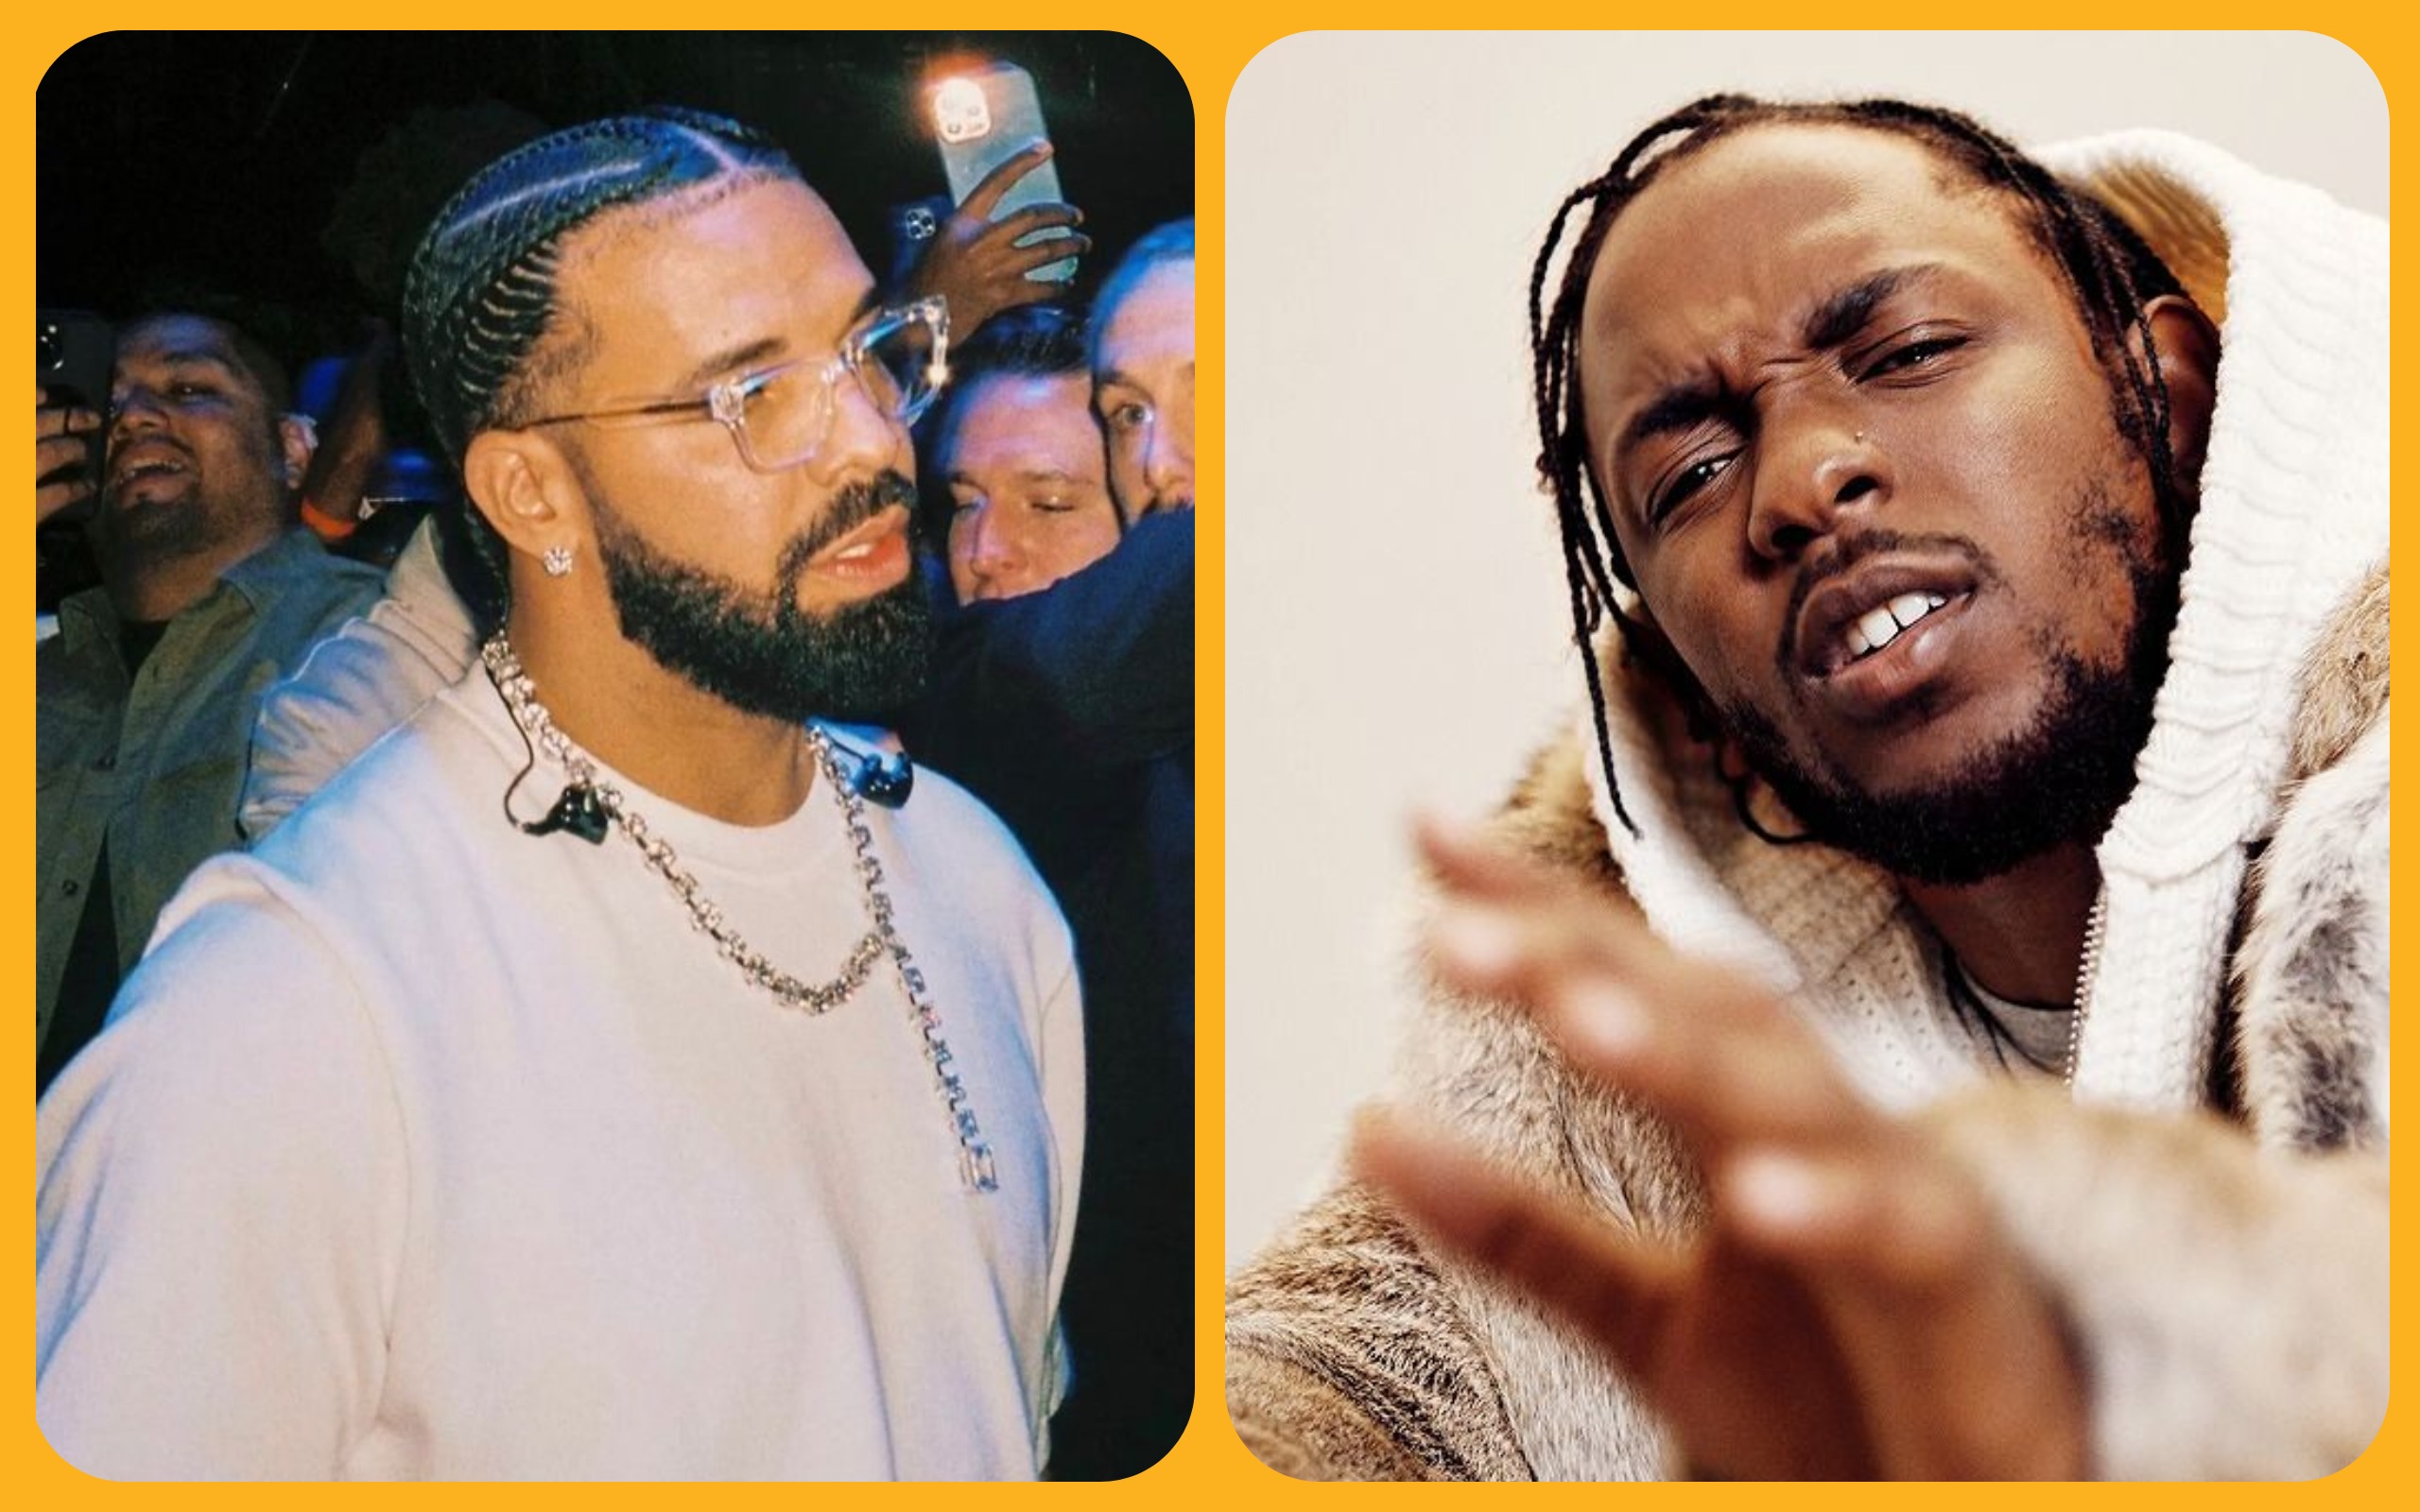 The Drake and Kendrick Lamar